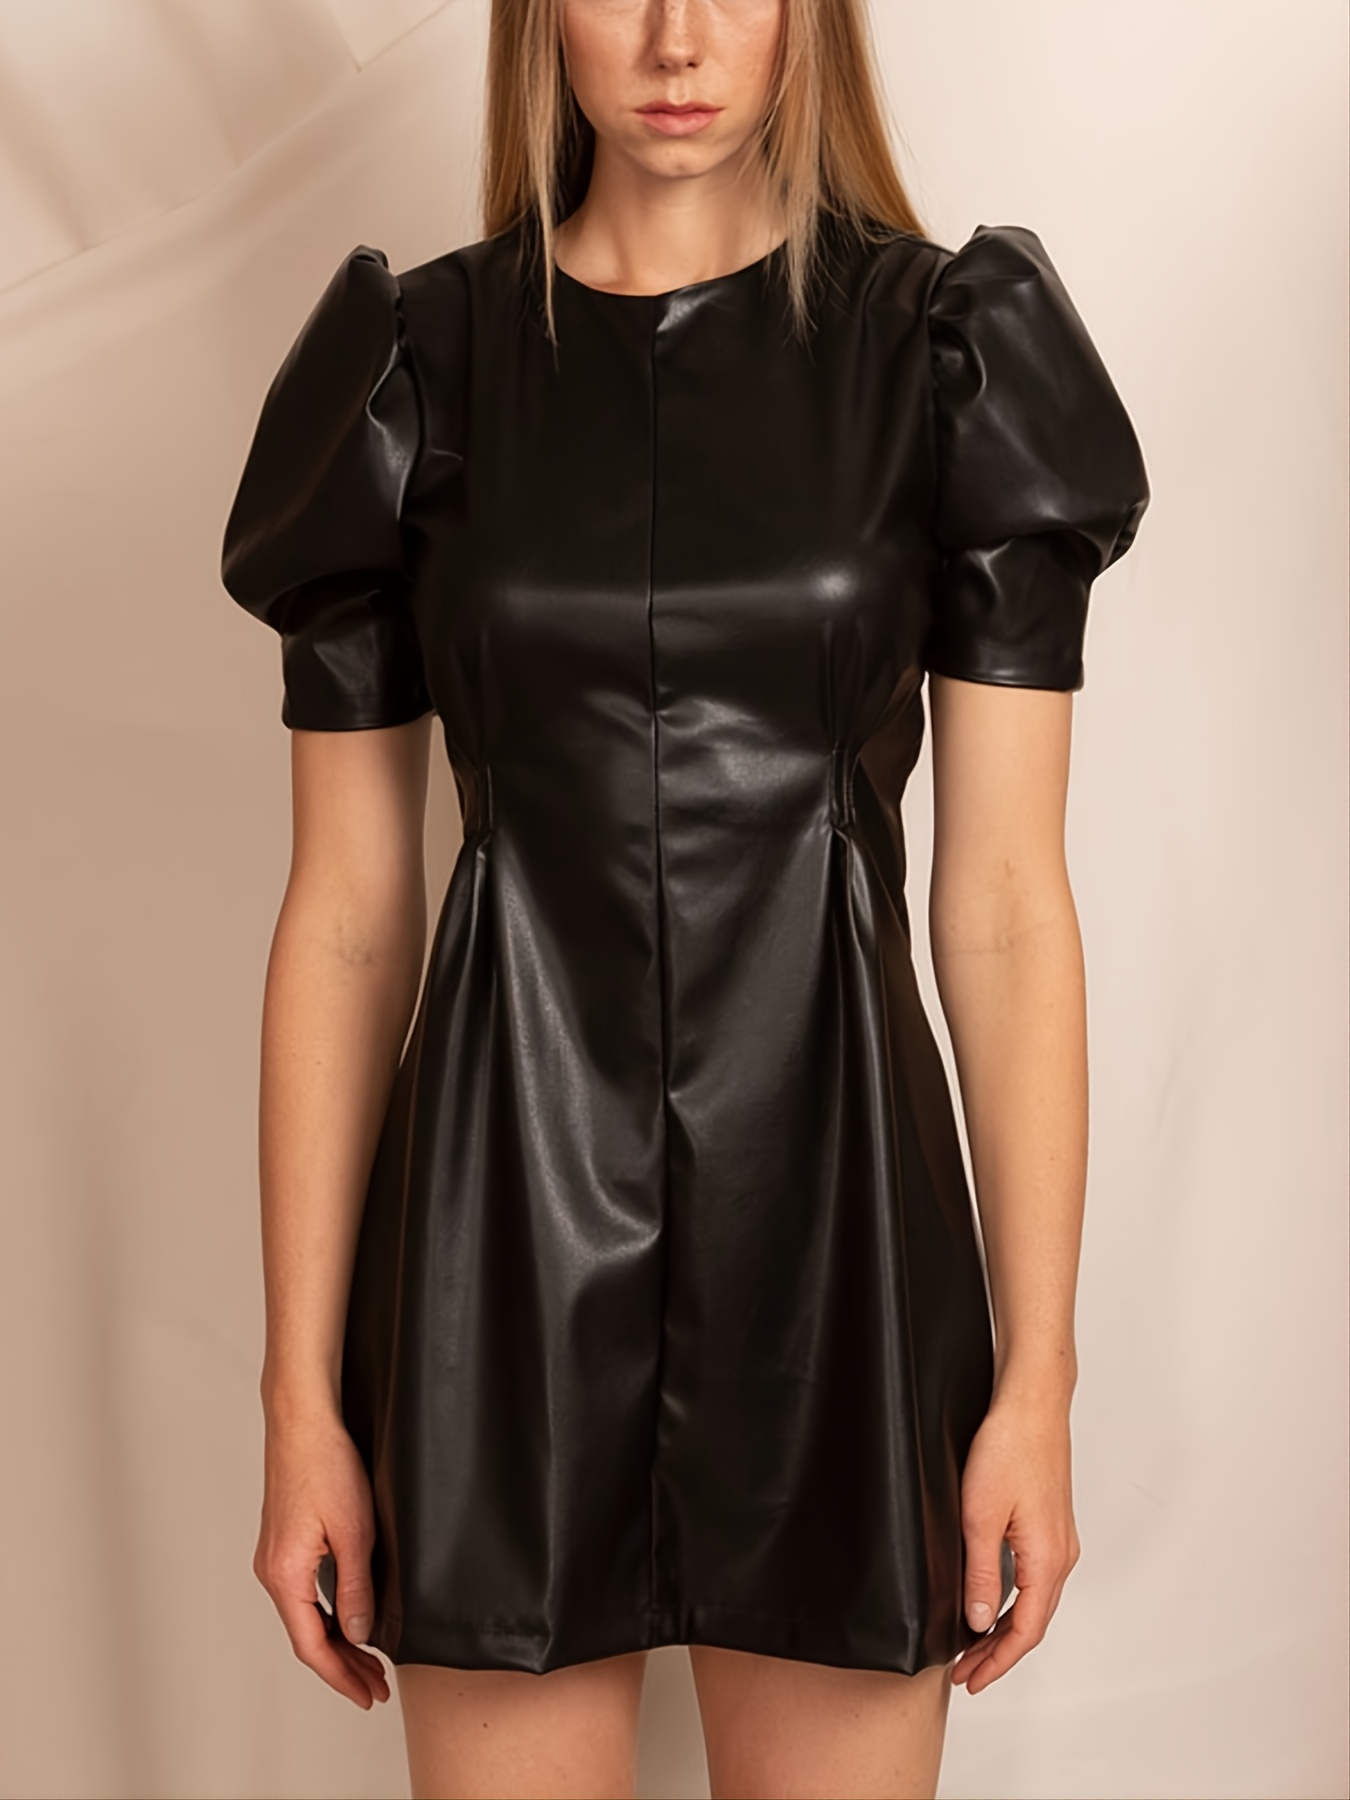 Women's Leather Dresses